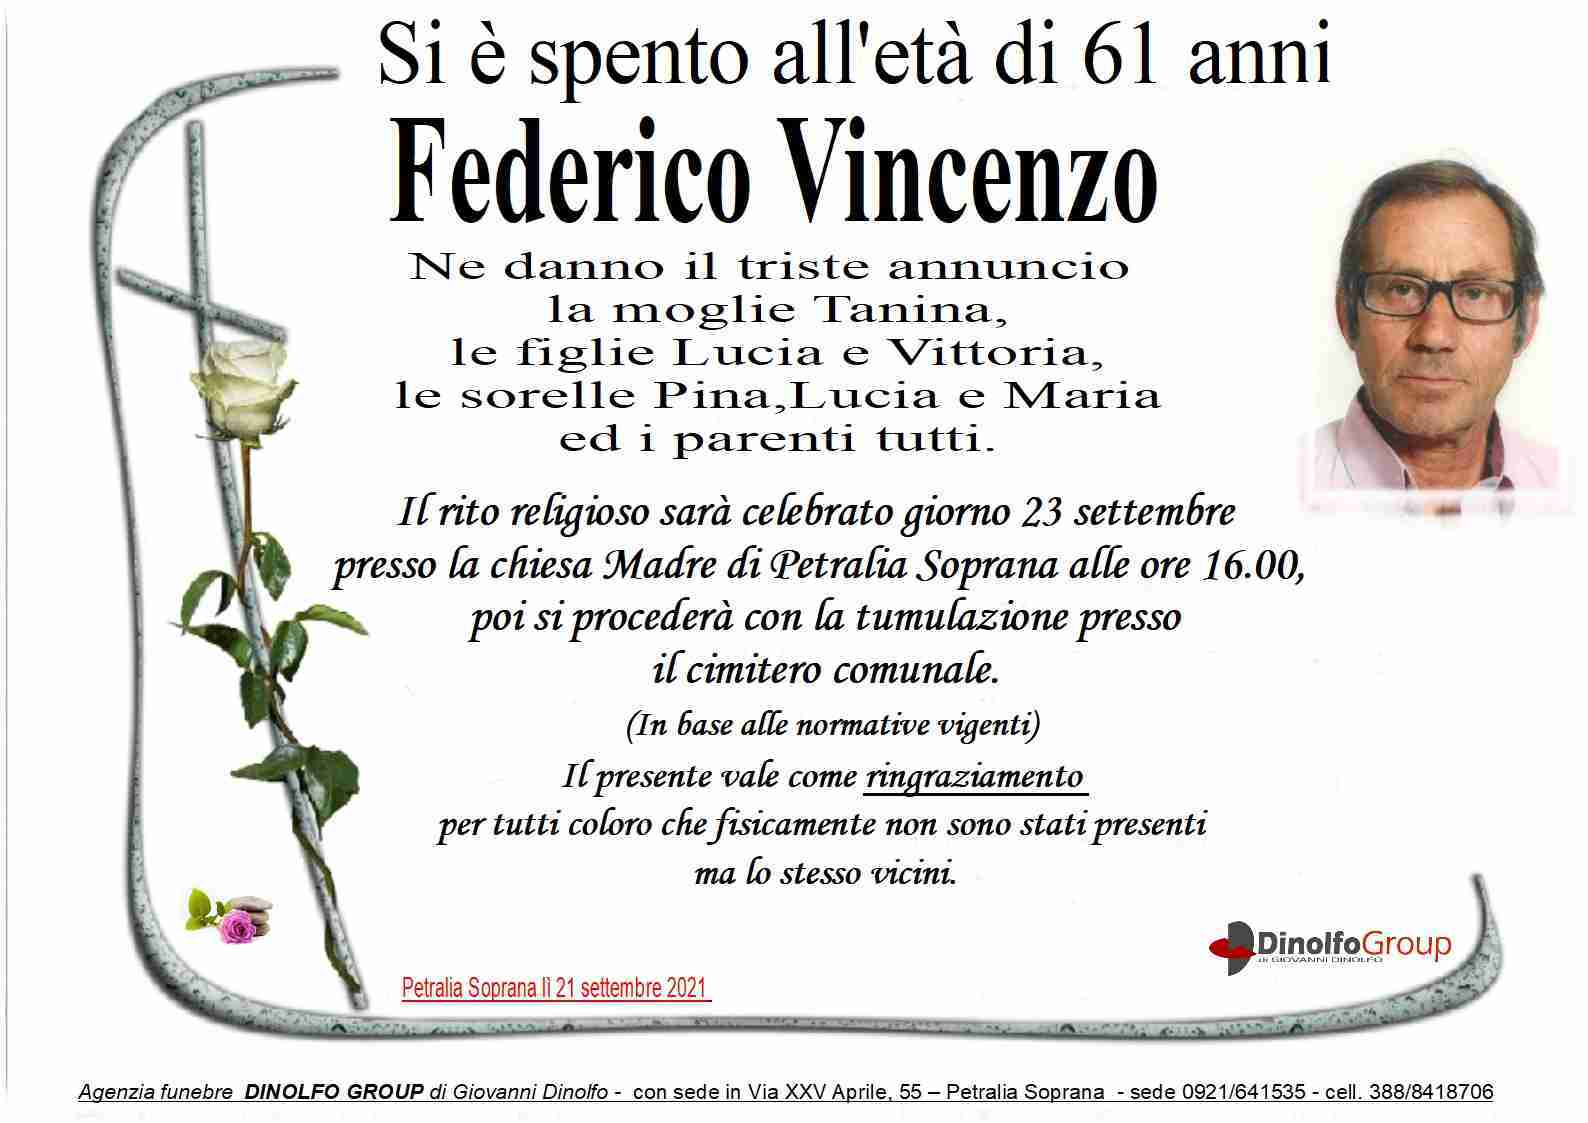 Vincenzo Federico